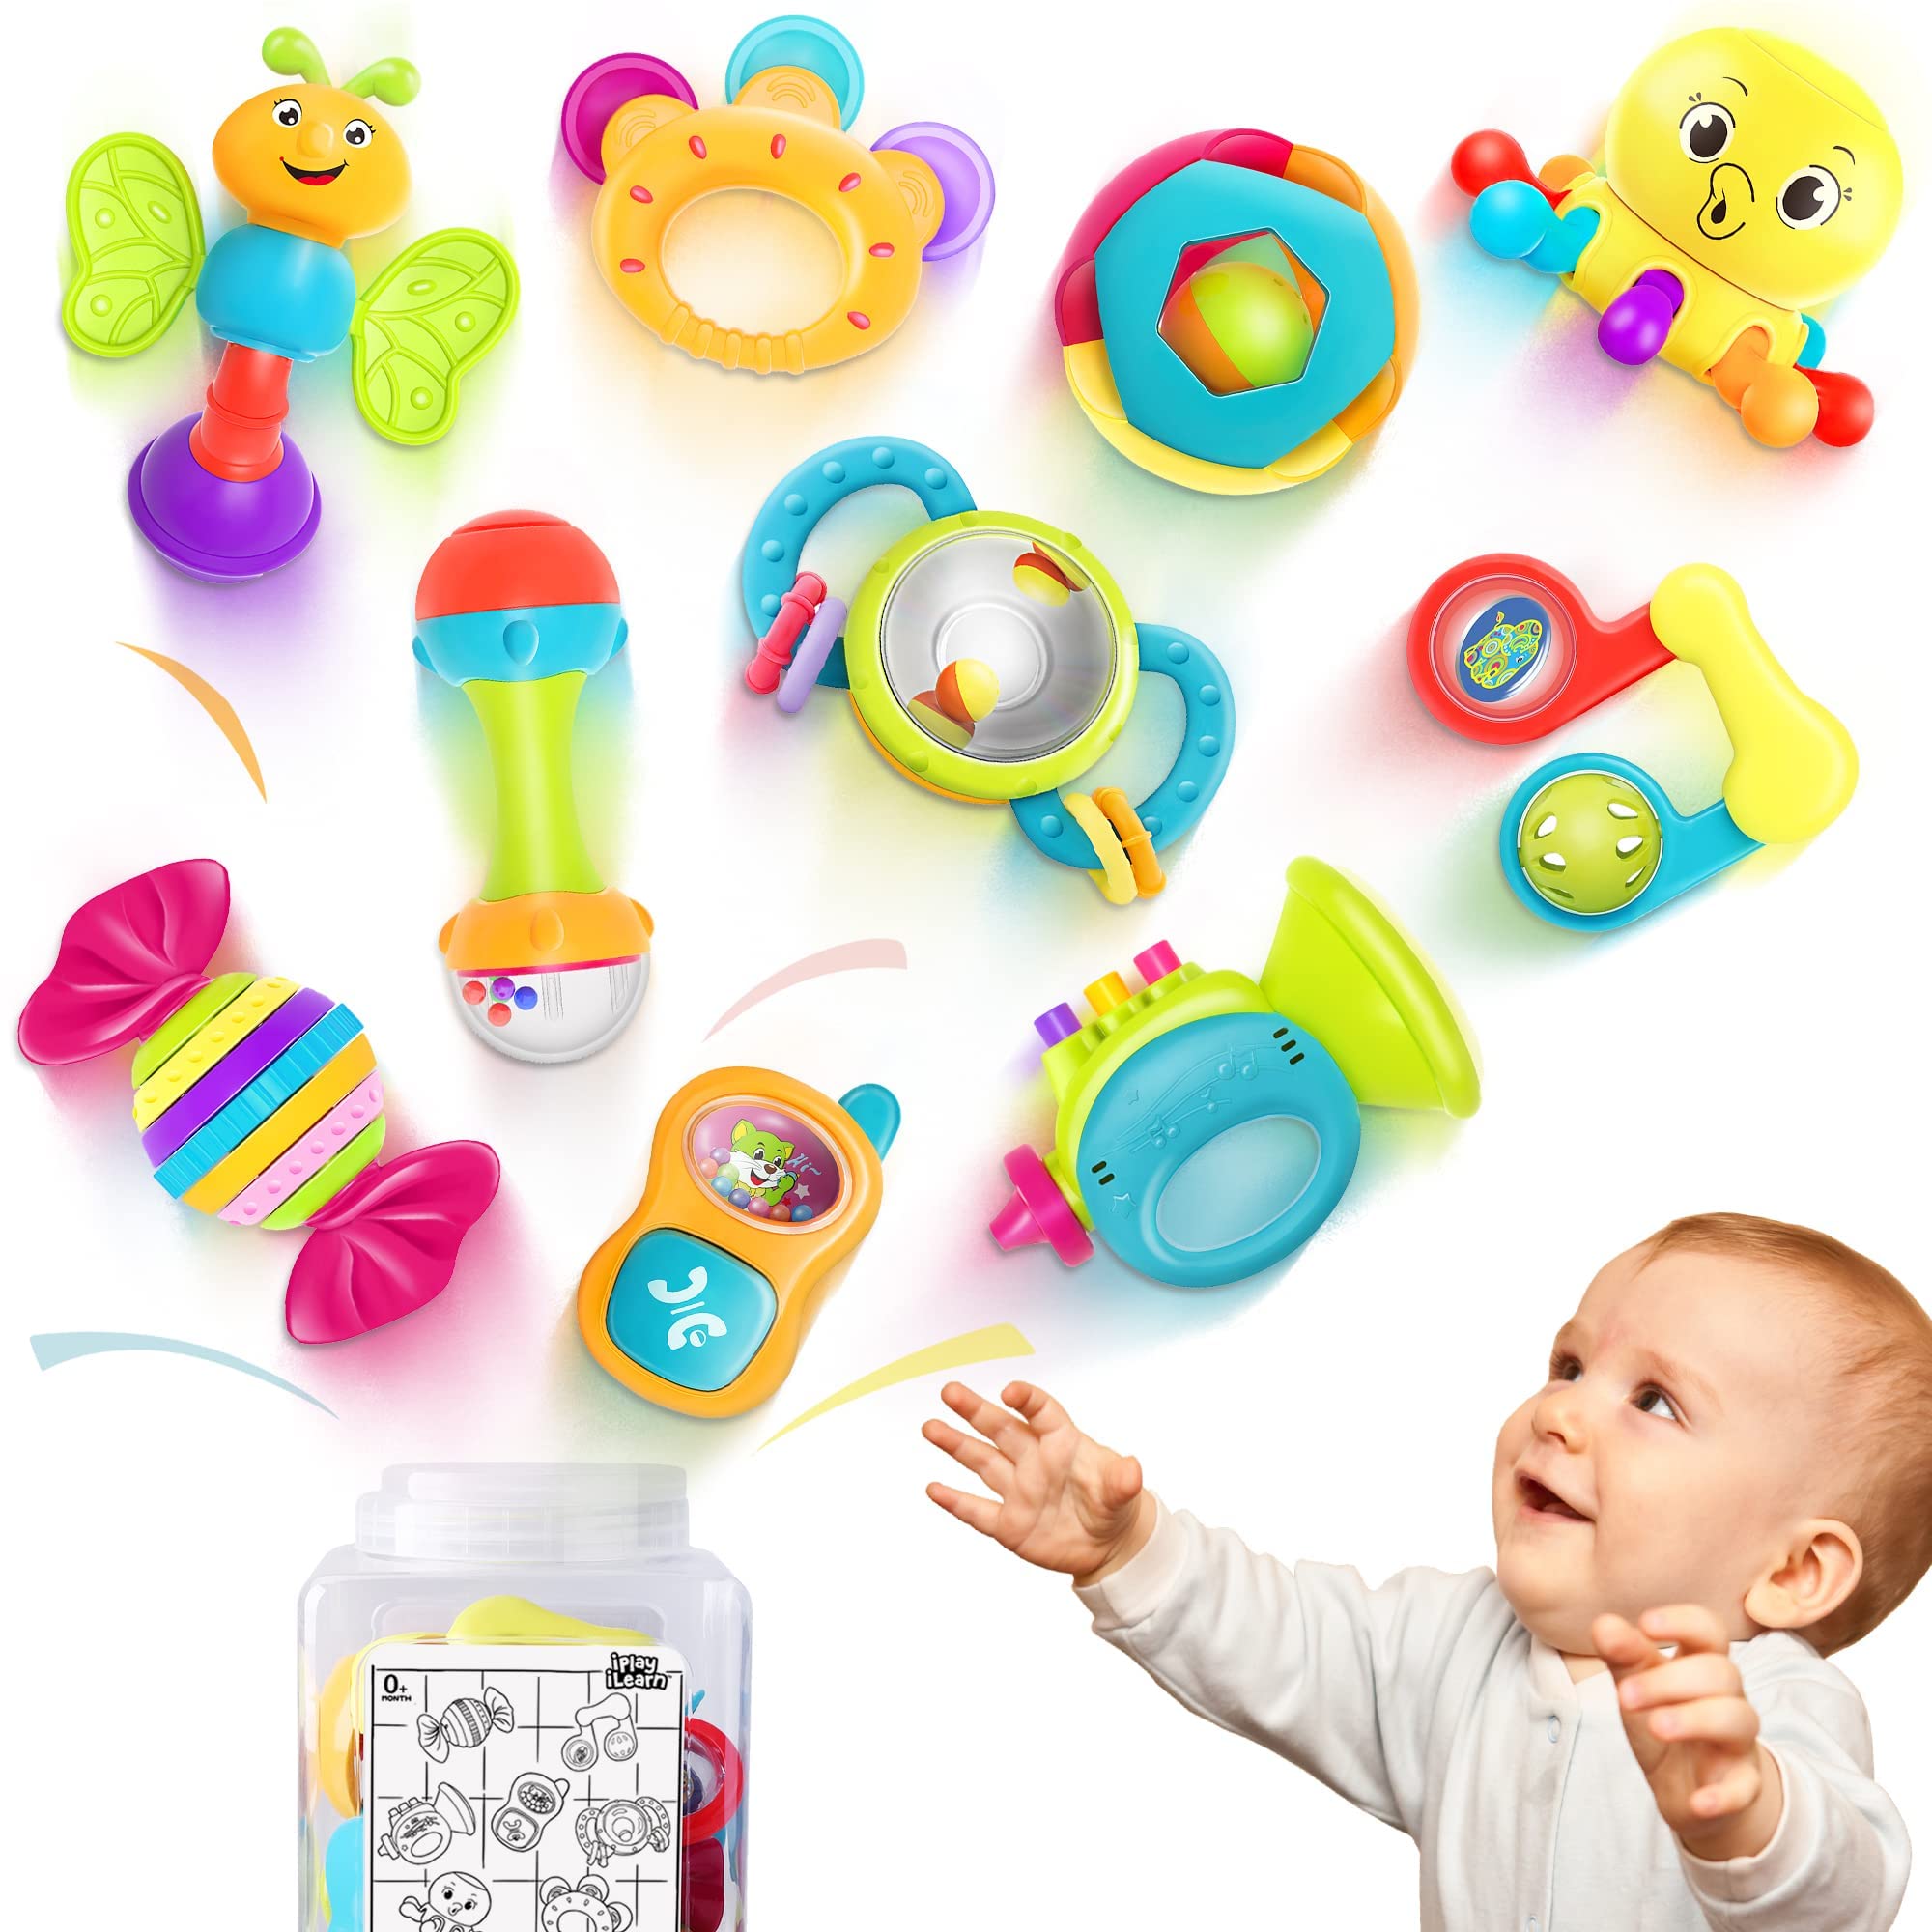 iPlay, iLearn 10pcs Baby Rattles Toys Set